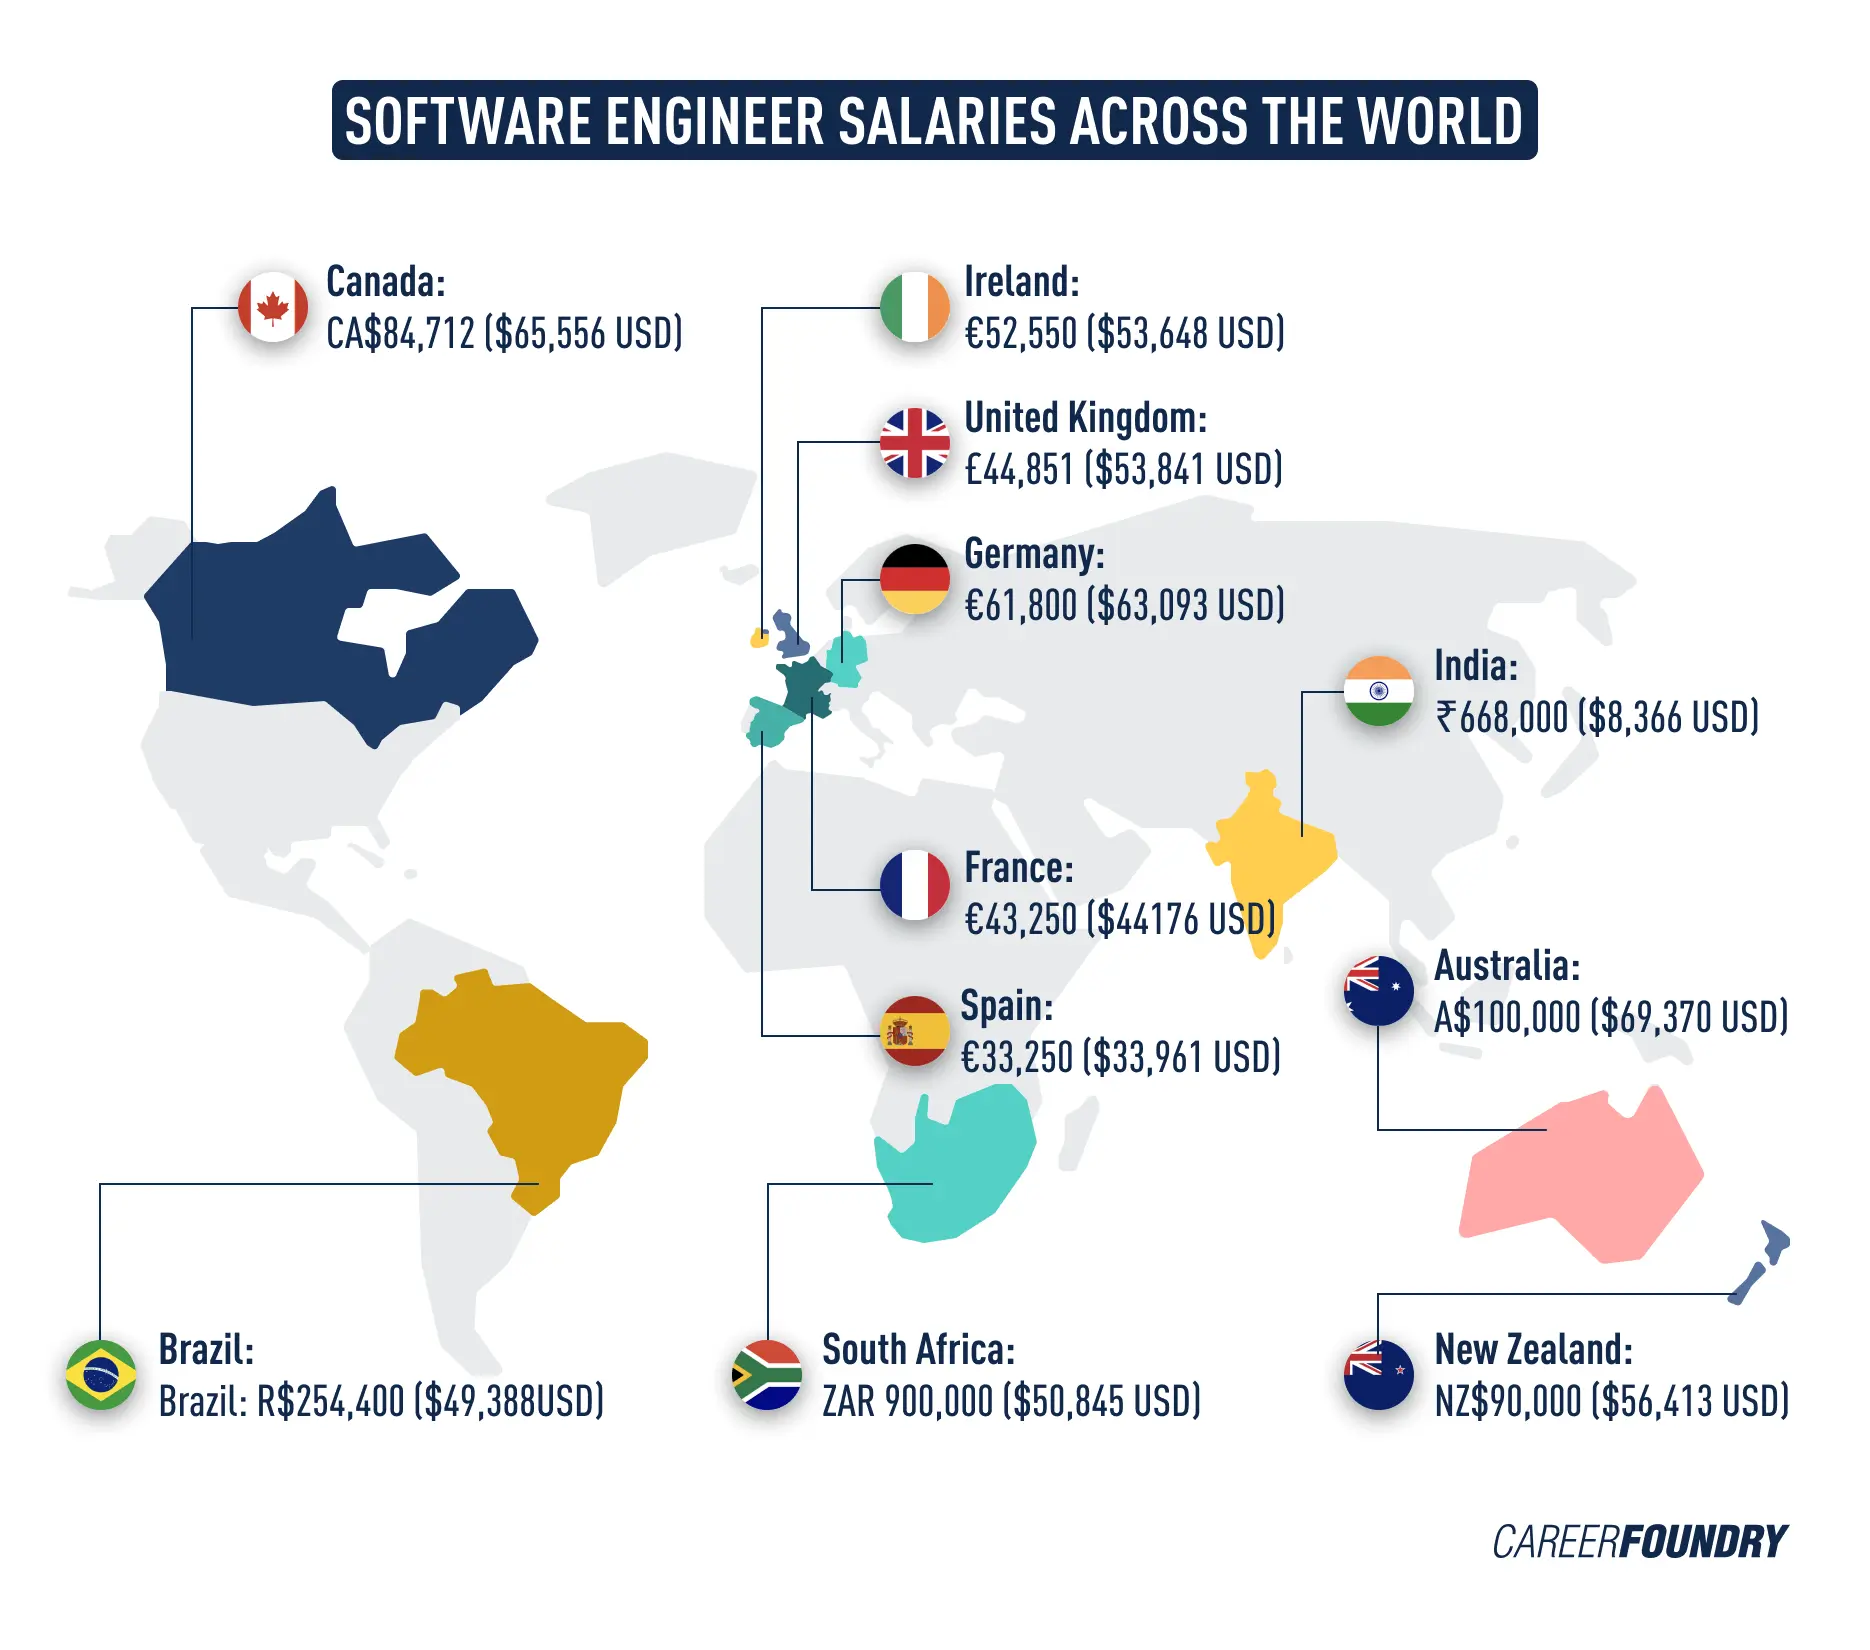 Software engineers salaries across the world